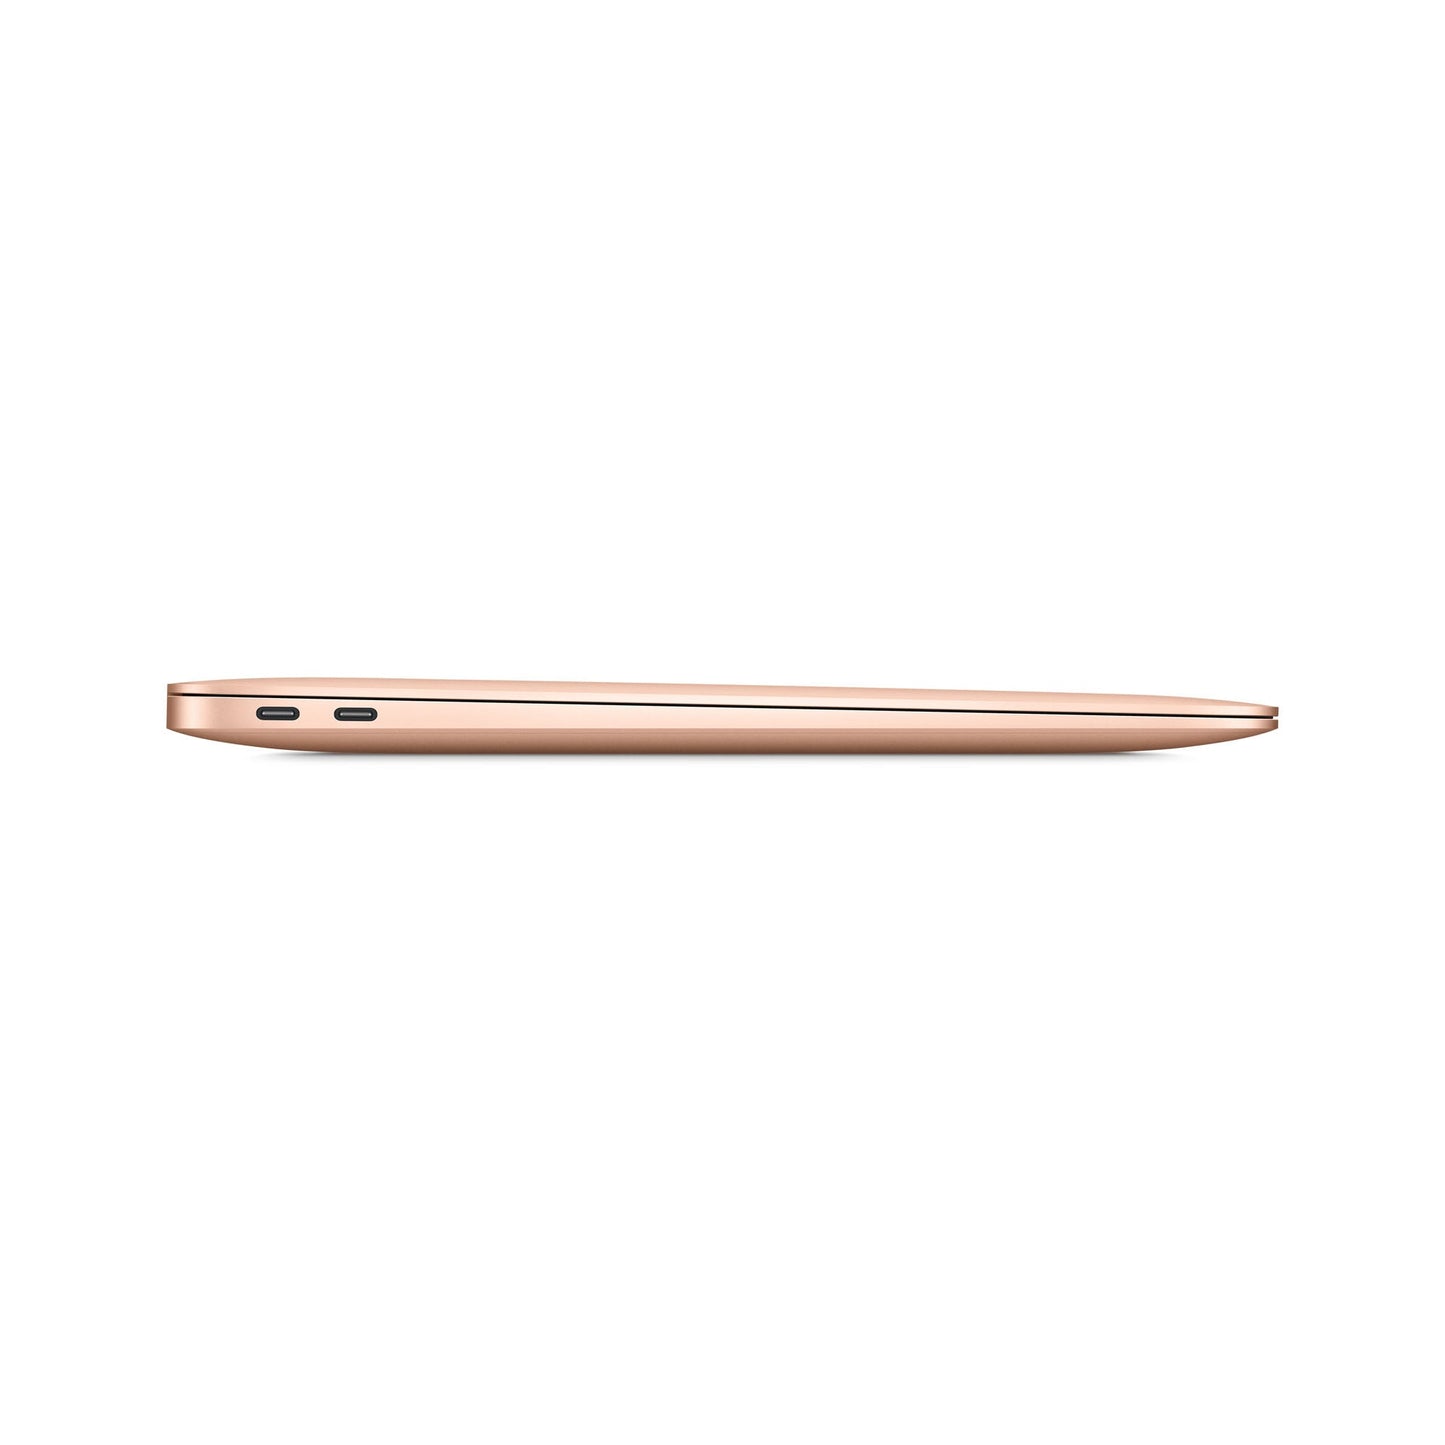 13-inch MacBook Air: Apple M1 chip with 8-core CPU and 7-core GPU 256GB - Gold